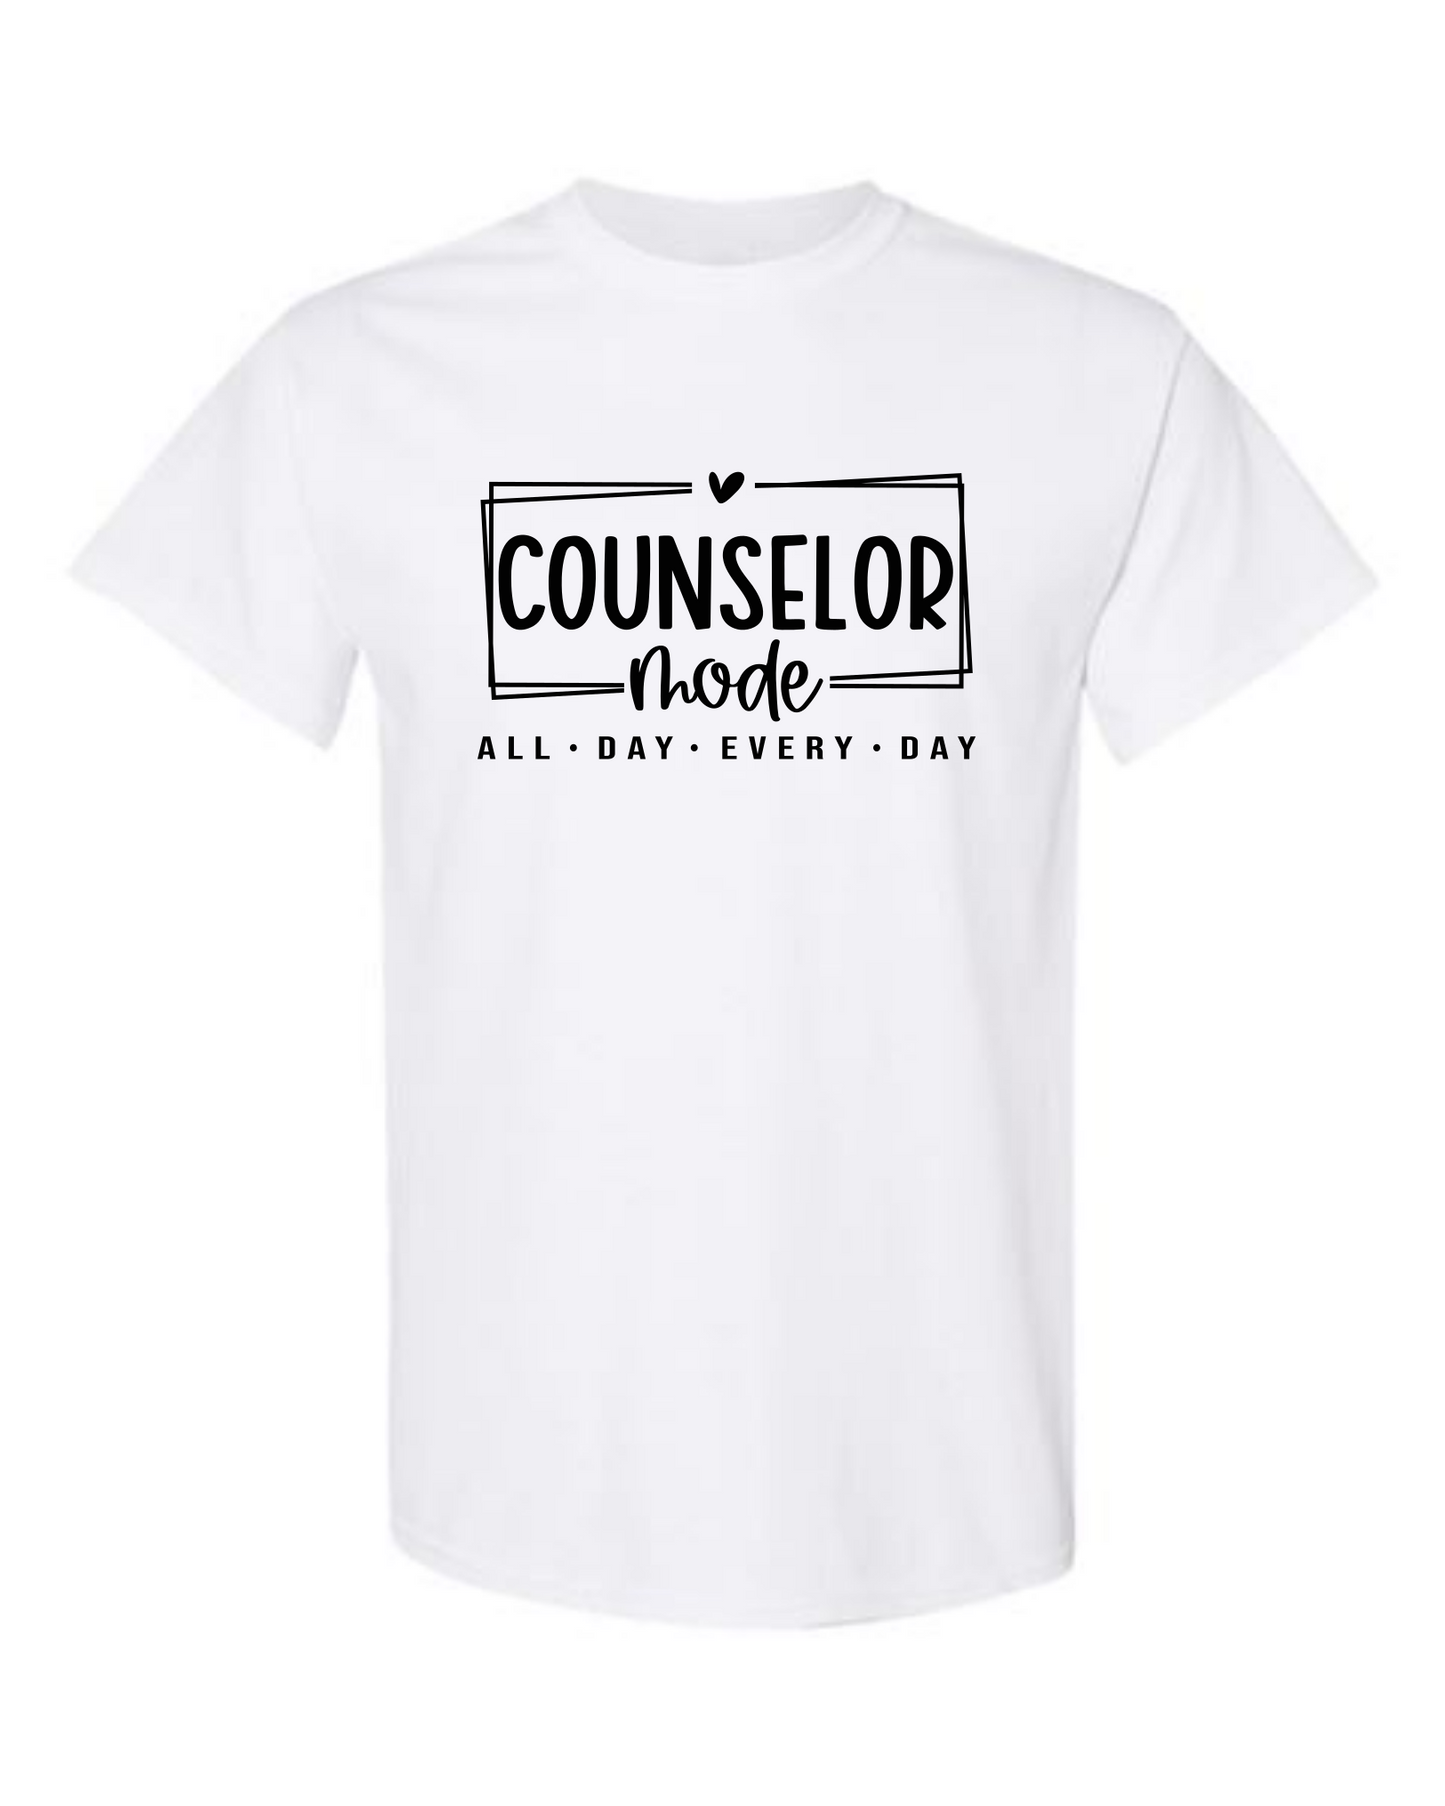 Counselor Mode Tshirt